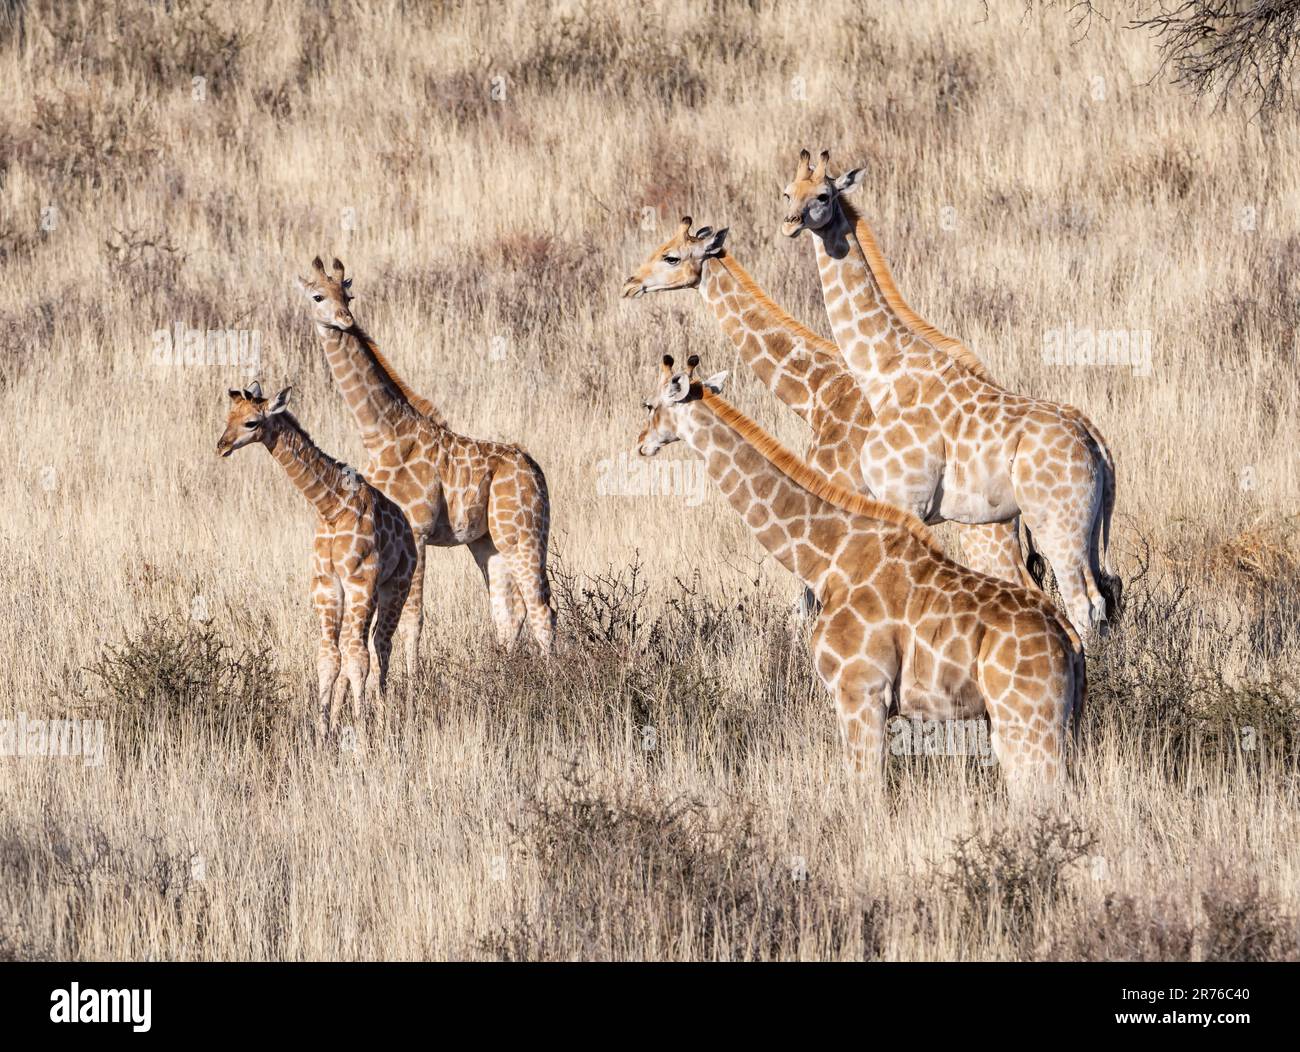 Giraffe in Southern African savannah Stock Photo